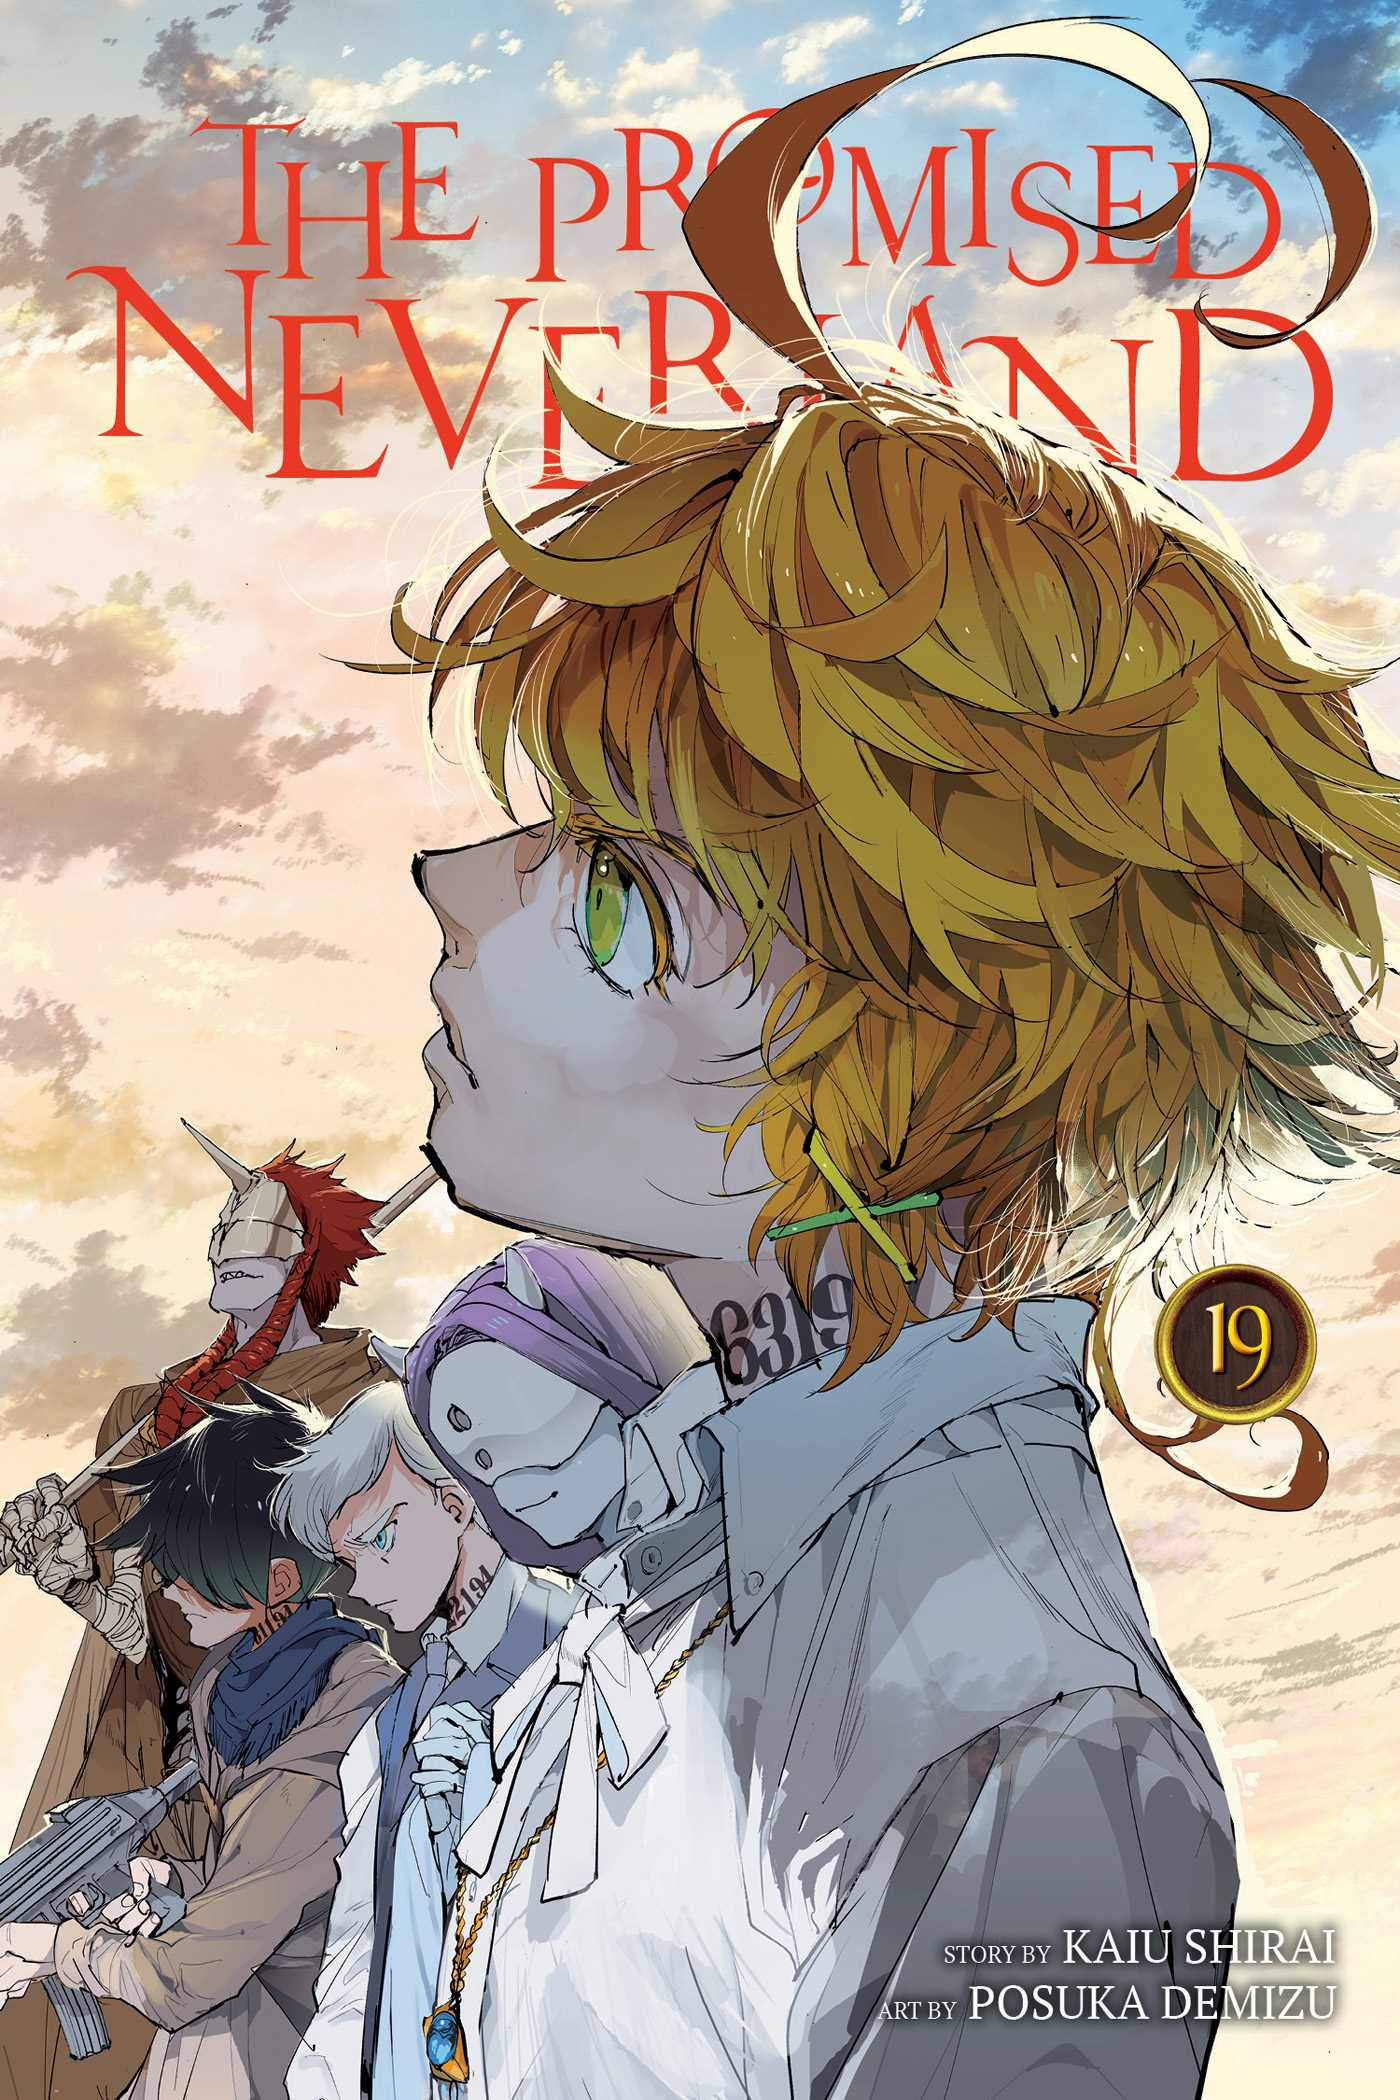 The Promised Neverland Season 2 Key Art Shows Emma and Mujika